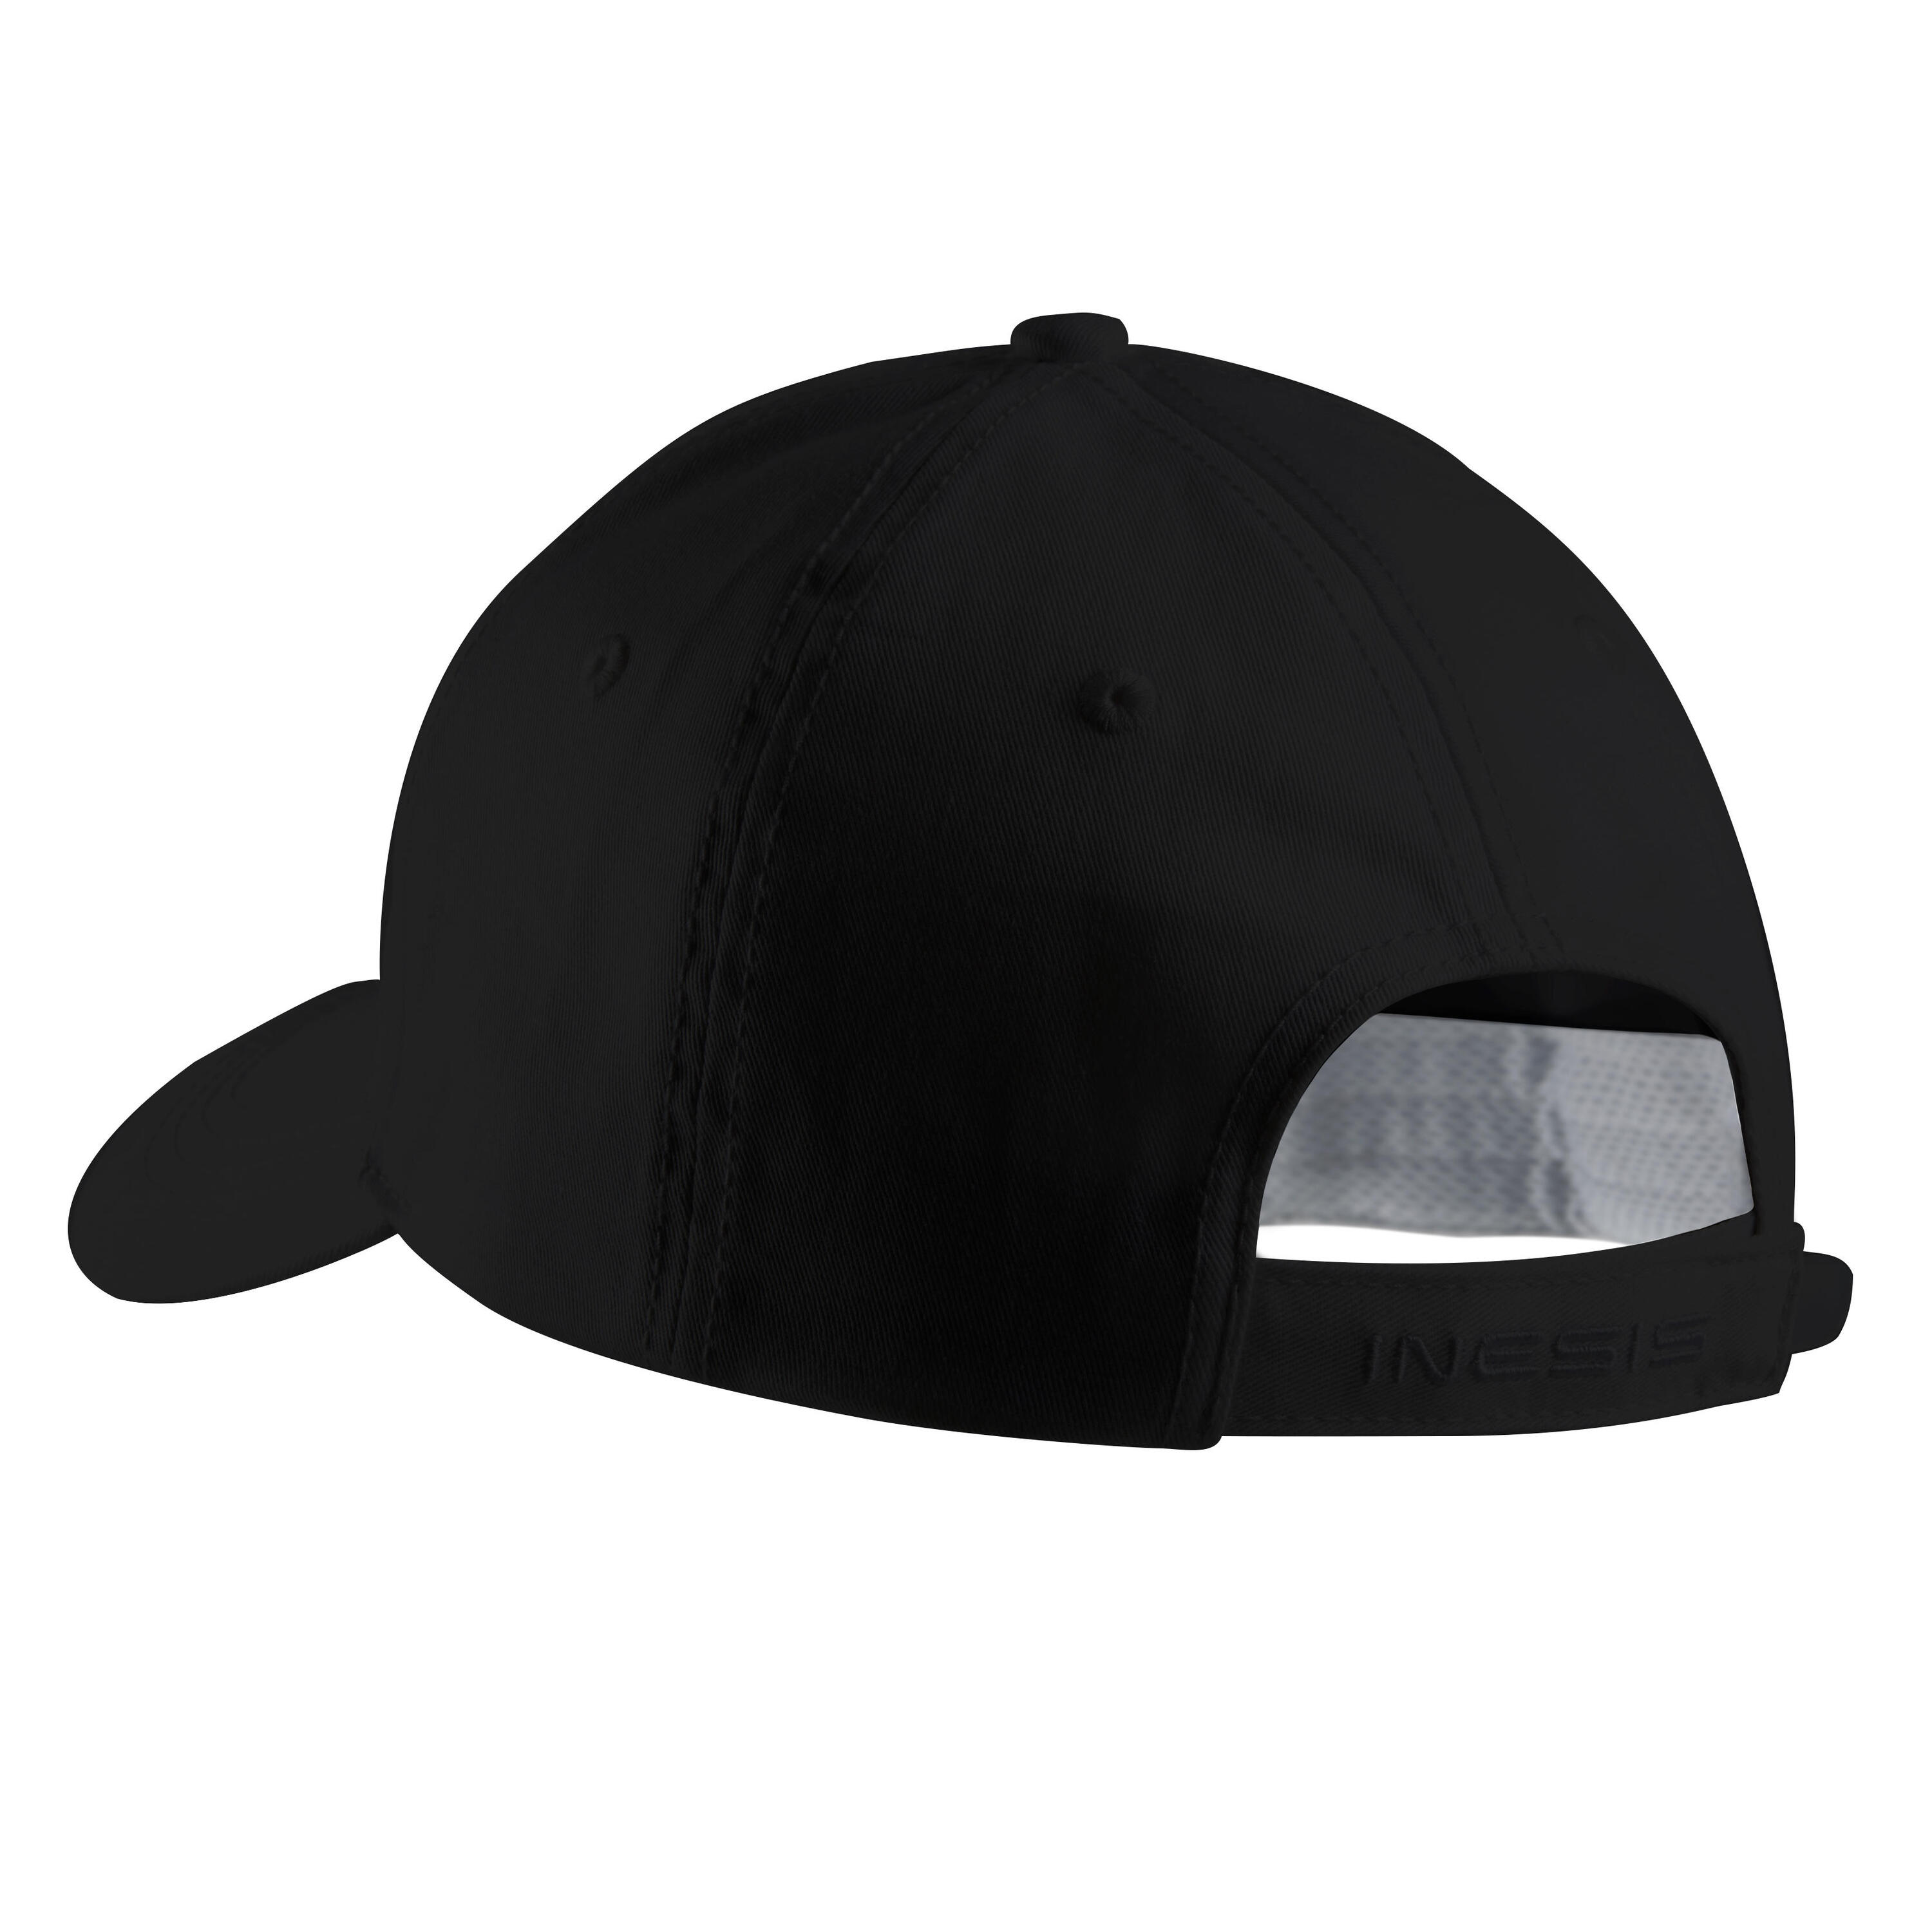 Adult's golf cap - MW 500 black 3/5